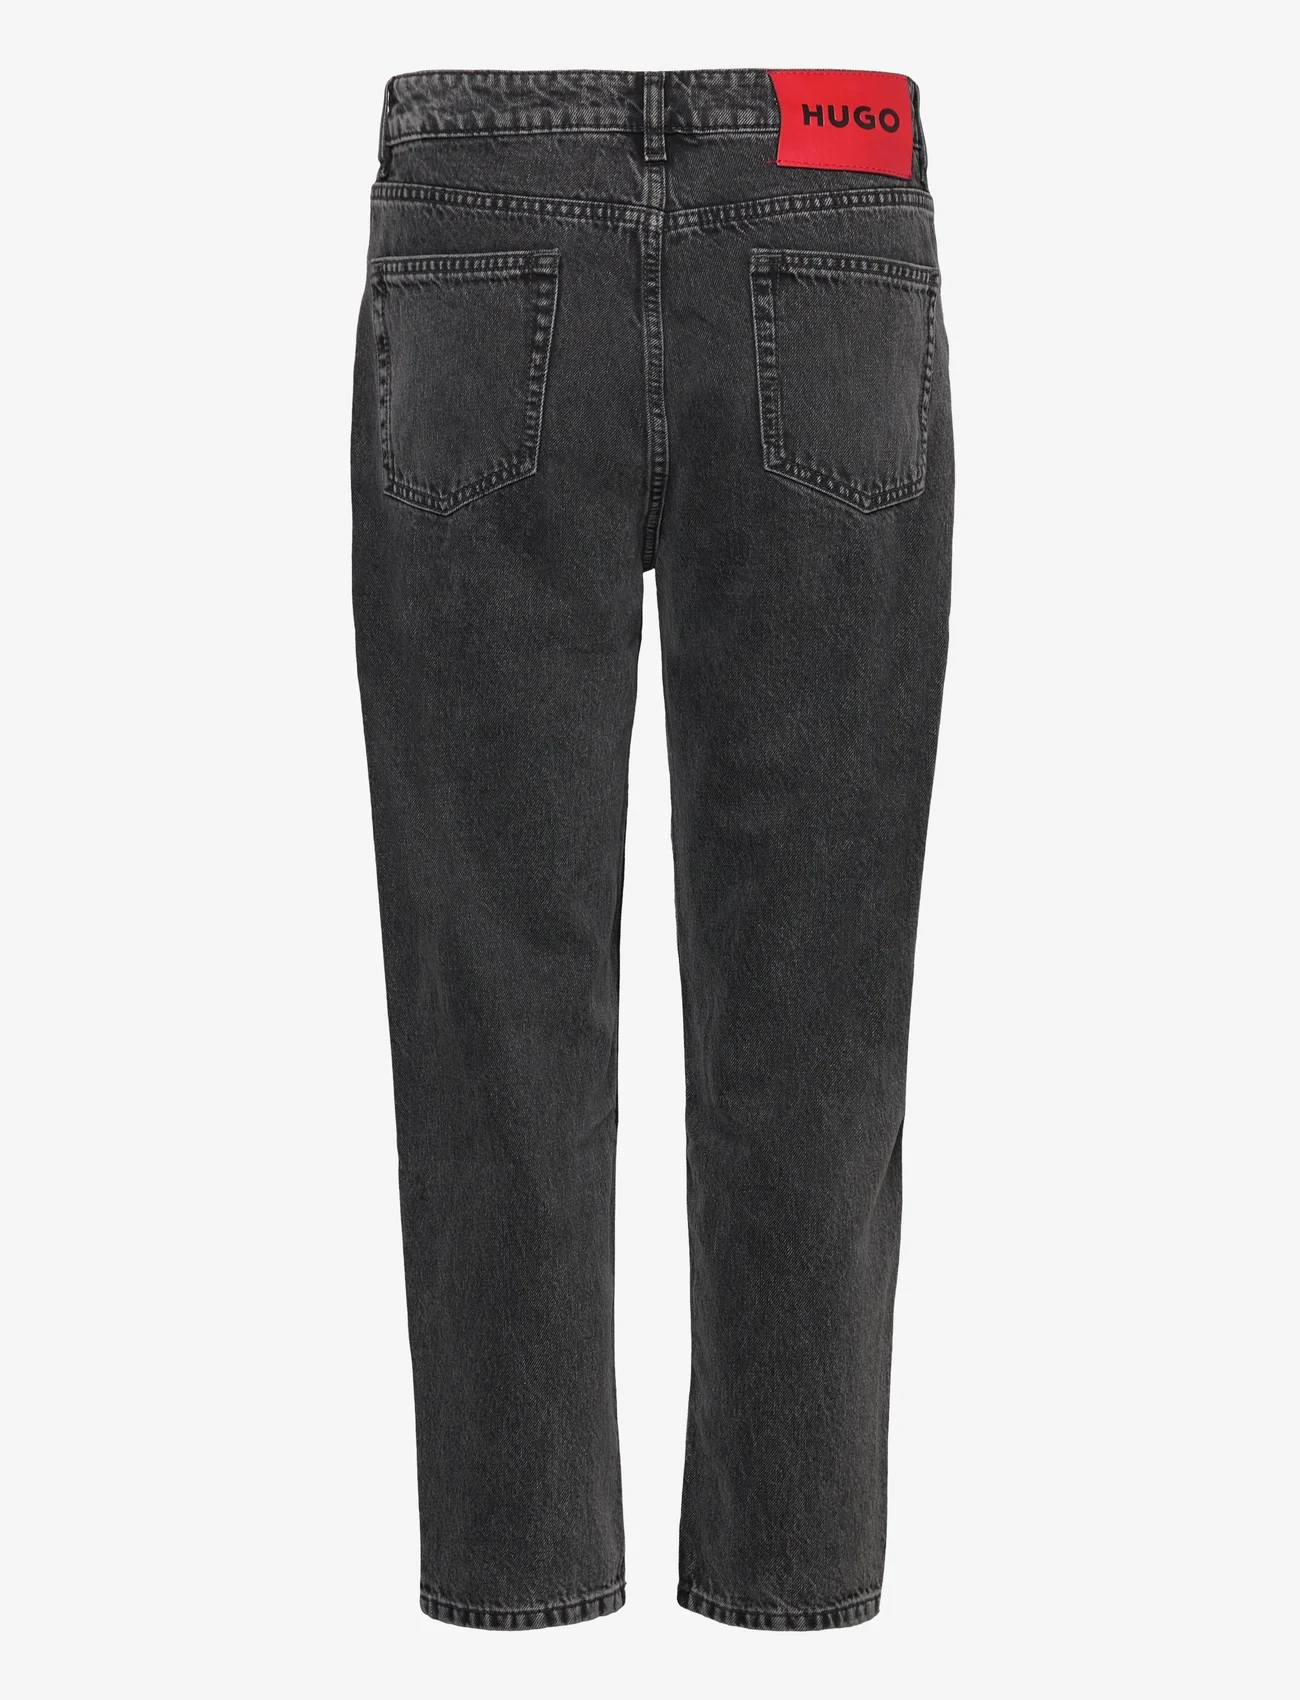 HUGO - 938 - raka jeans - grey - 1